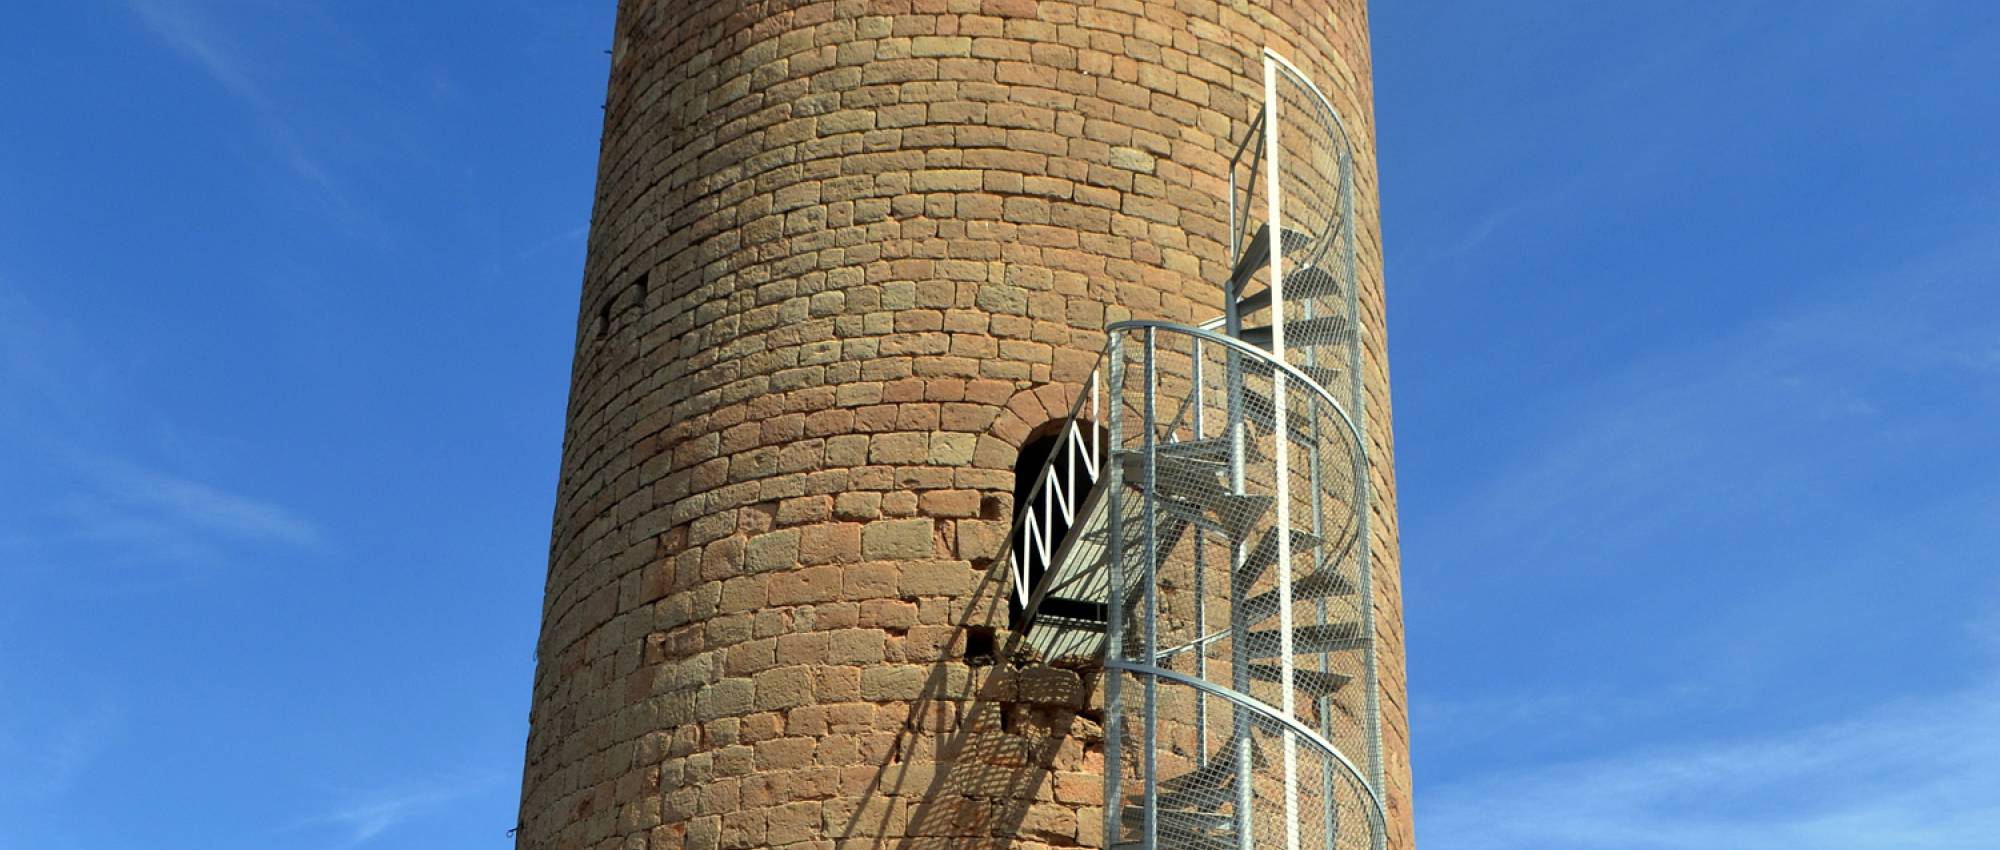 Torre de la Manresana. Angela Llop / Wikimedia Commons. CC BY-SA 2.0